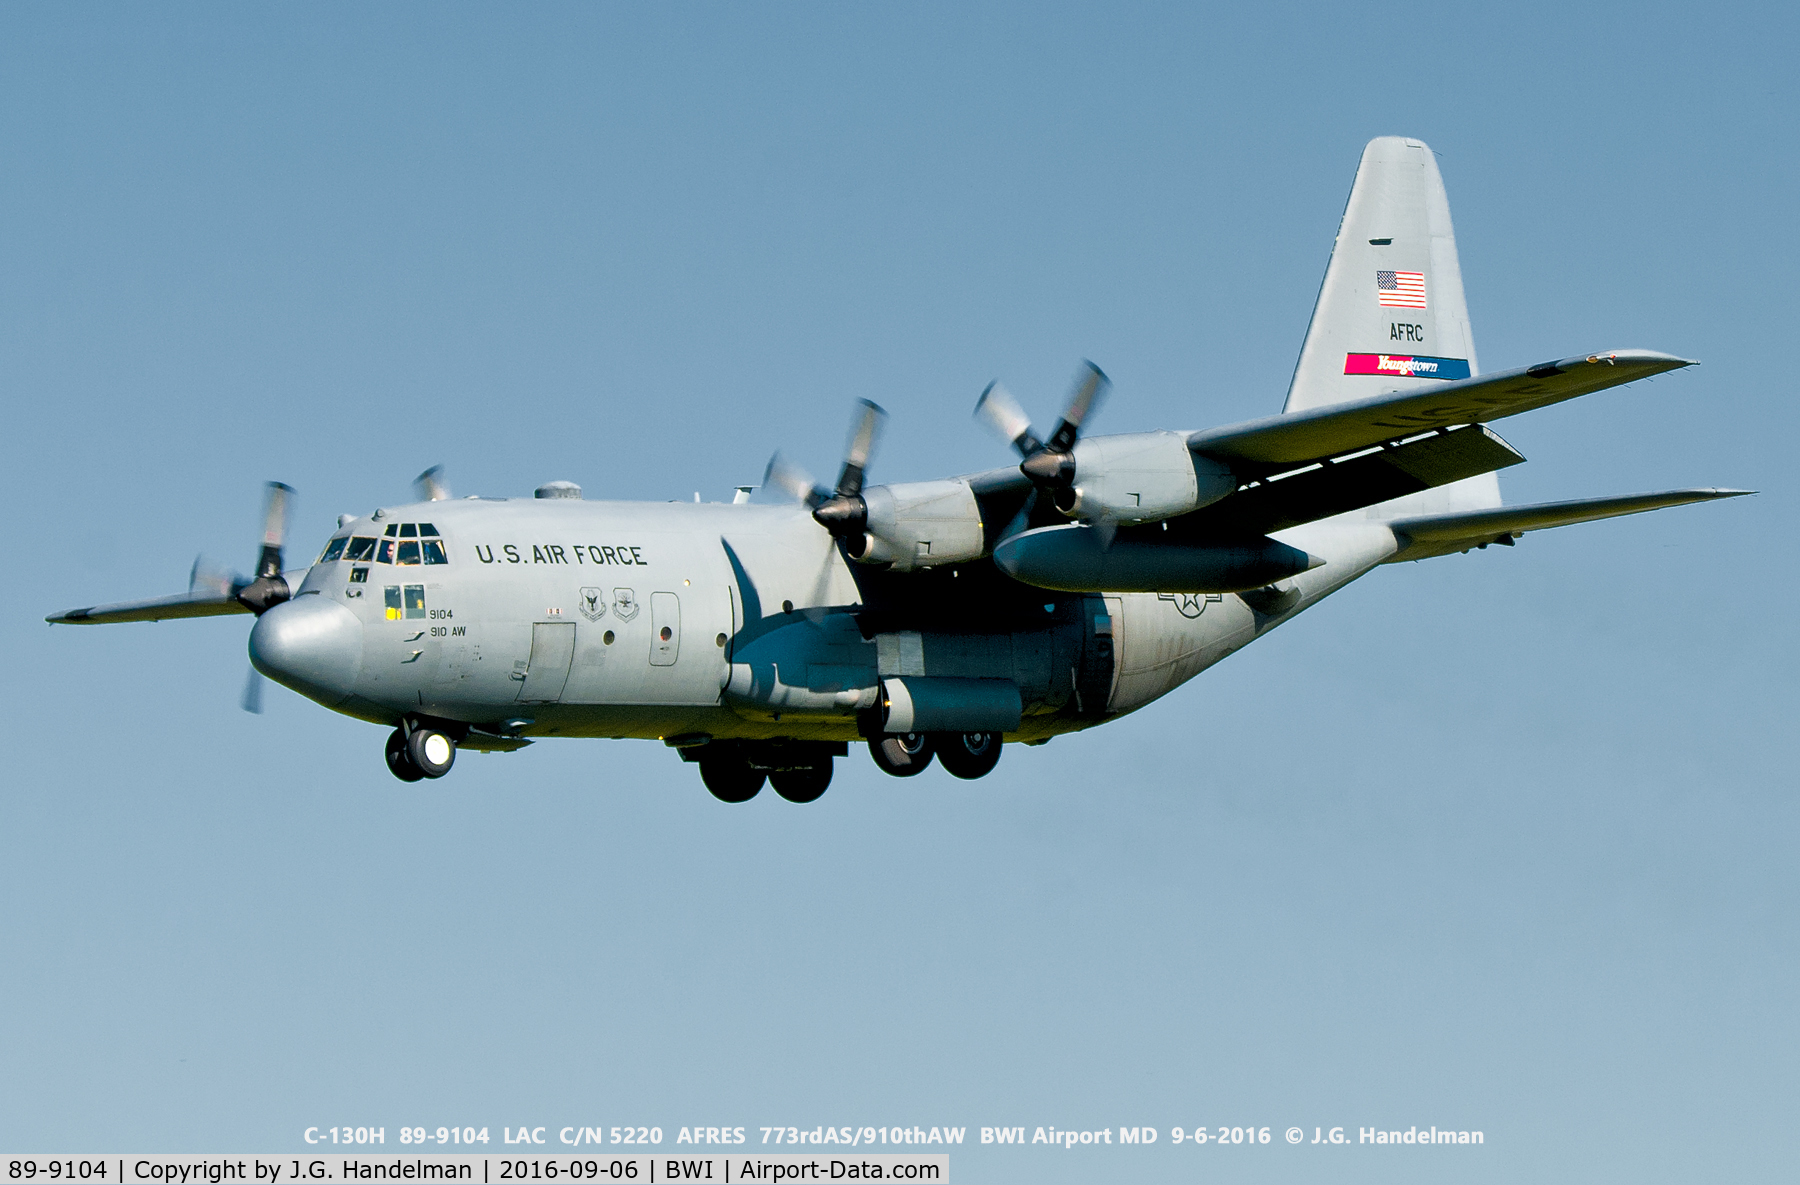 89-9104, 1989 Lockheed C-130H Hercules C/N 382-5220, Near threshold.